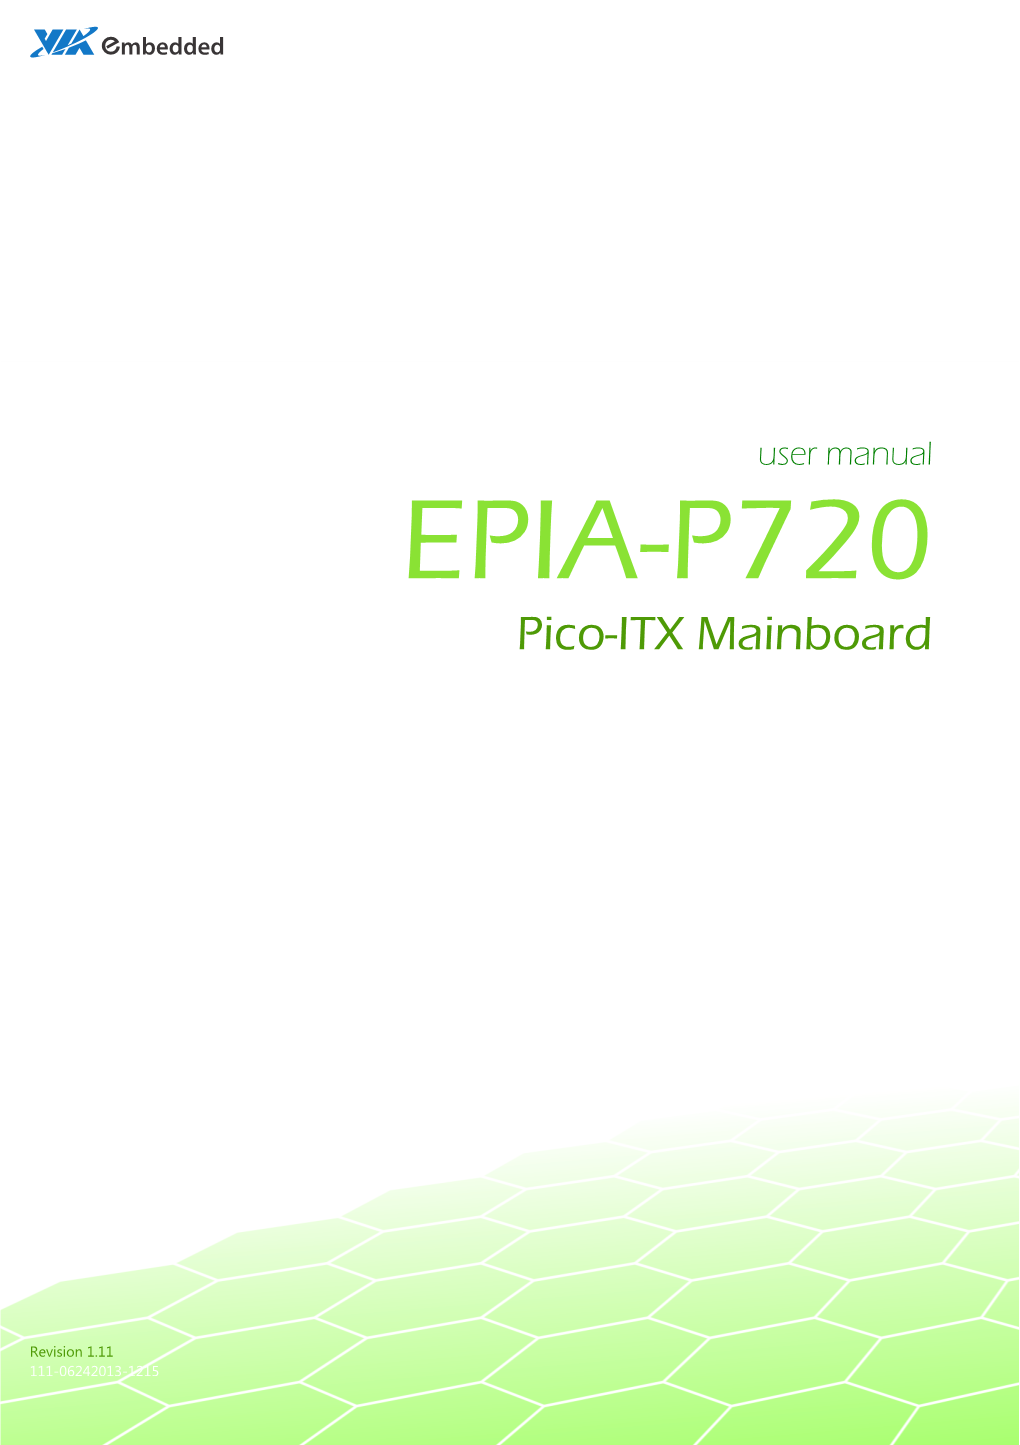 EPIA-P720 Pico-ITX Mainboard